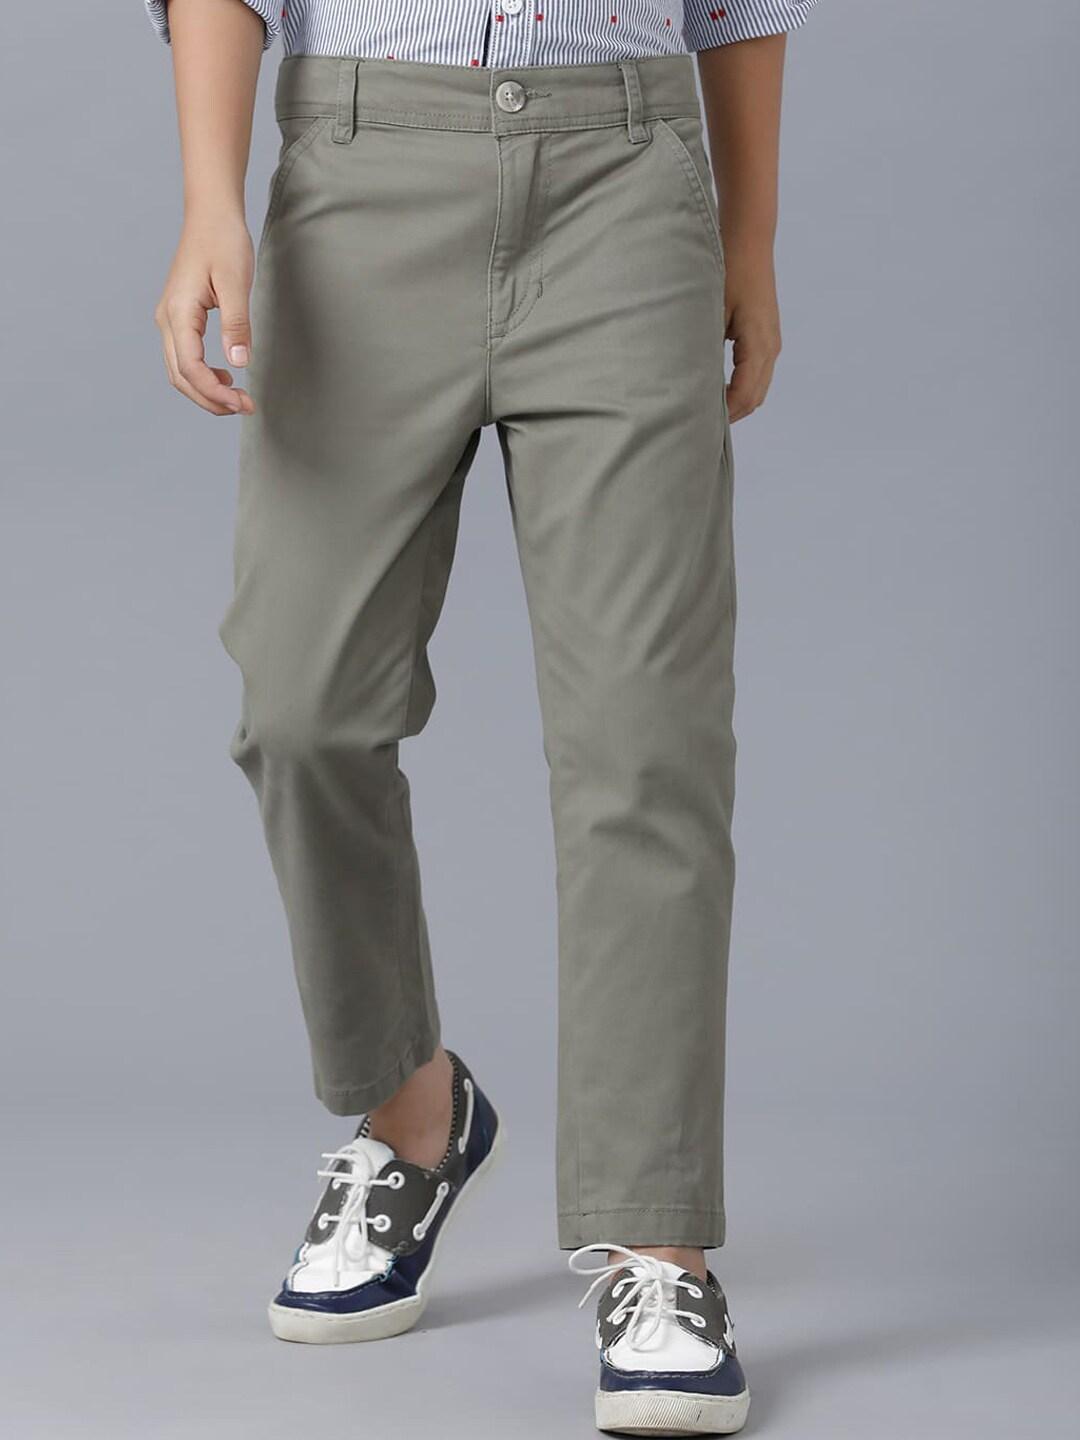 under-fourteen-only-boys-olive-green-slim-fit-trouser